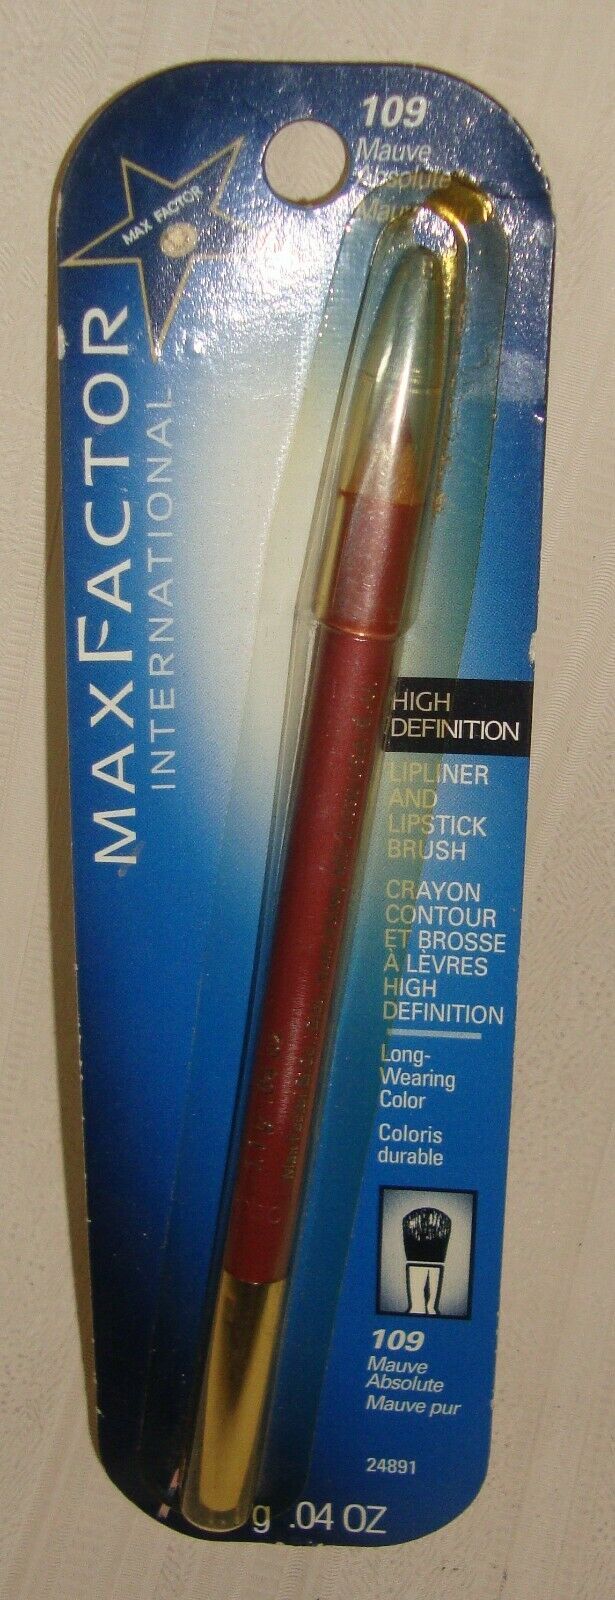 Max Factor High Definition Lipliner & Lipstick Brush Mauve 109 NEW RARE - $9.89